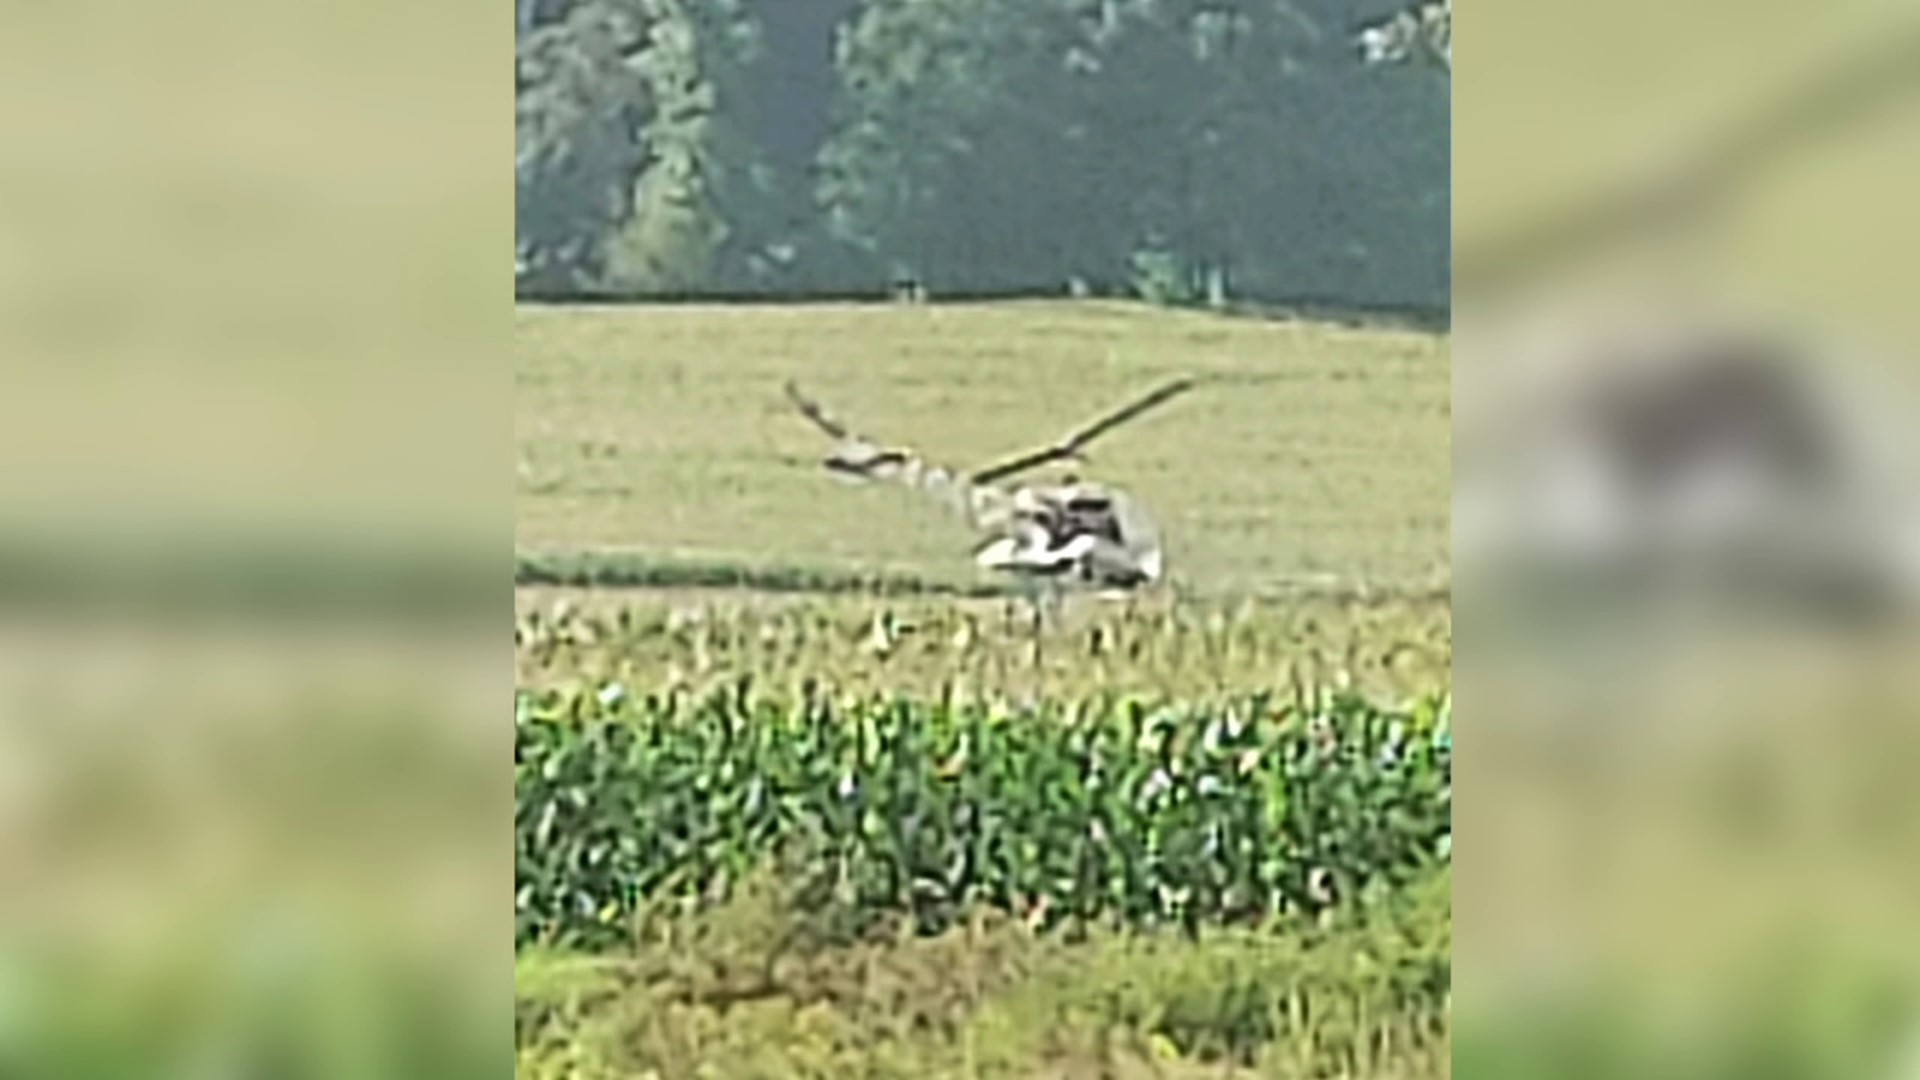 The crash happened Saturday morning at a field along Mifflin X Road in Mifflin Township.